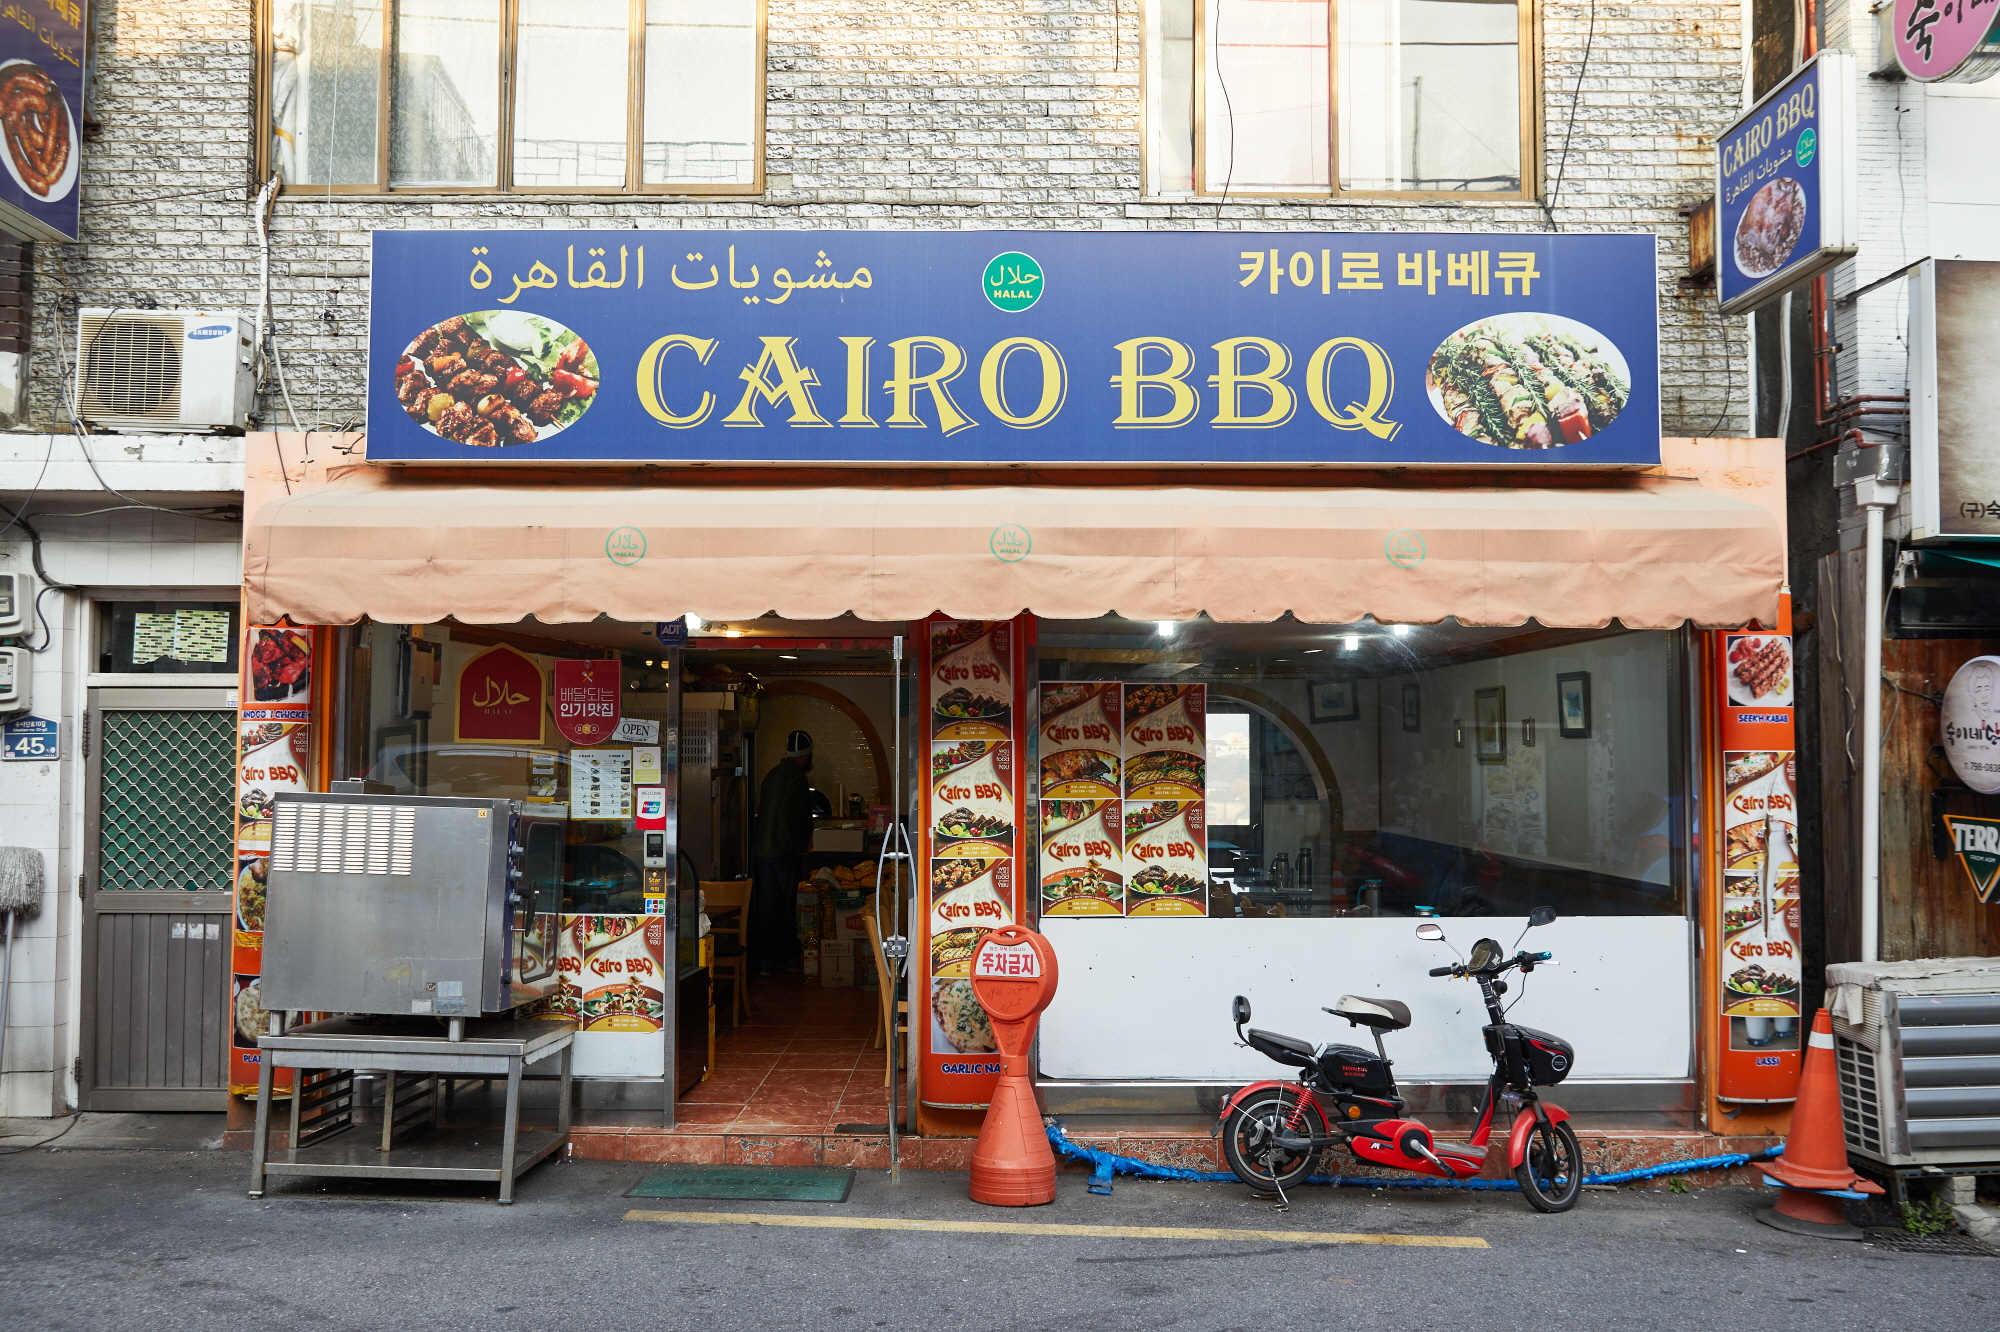 Cairo BBQ (카이로 바베큐)